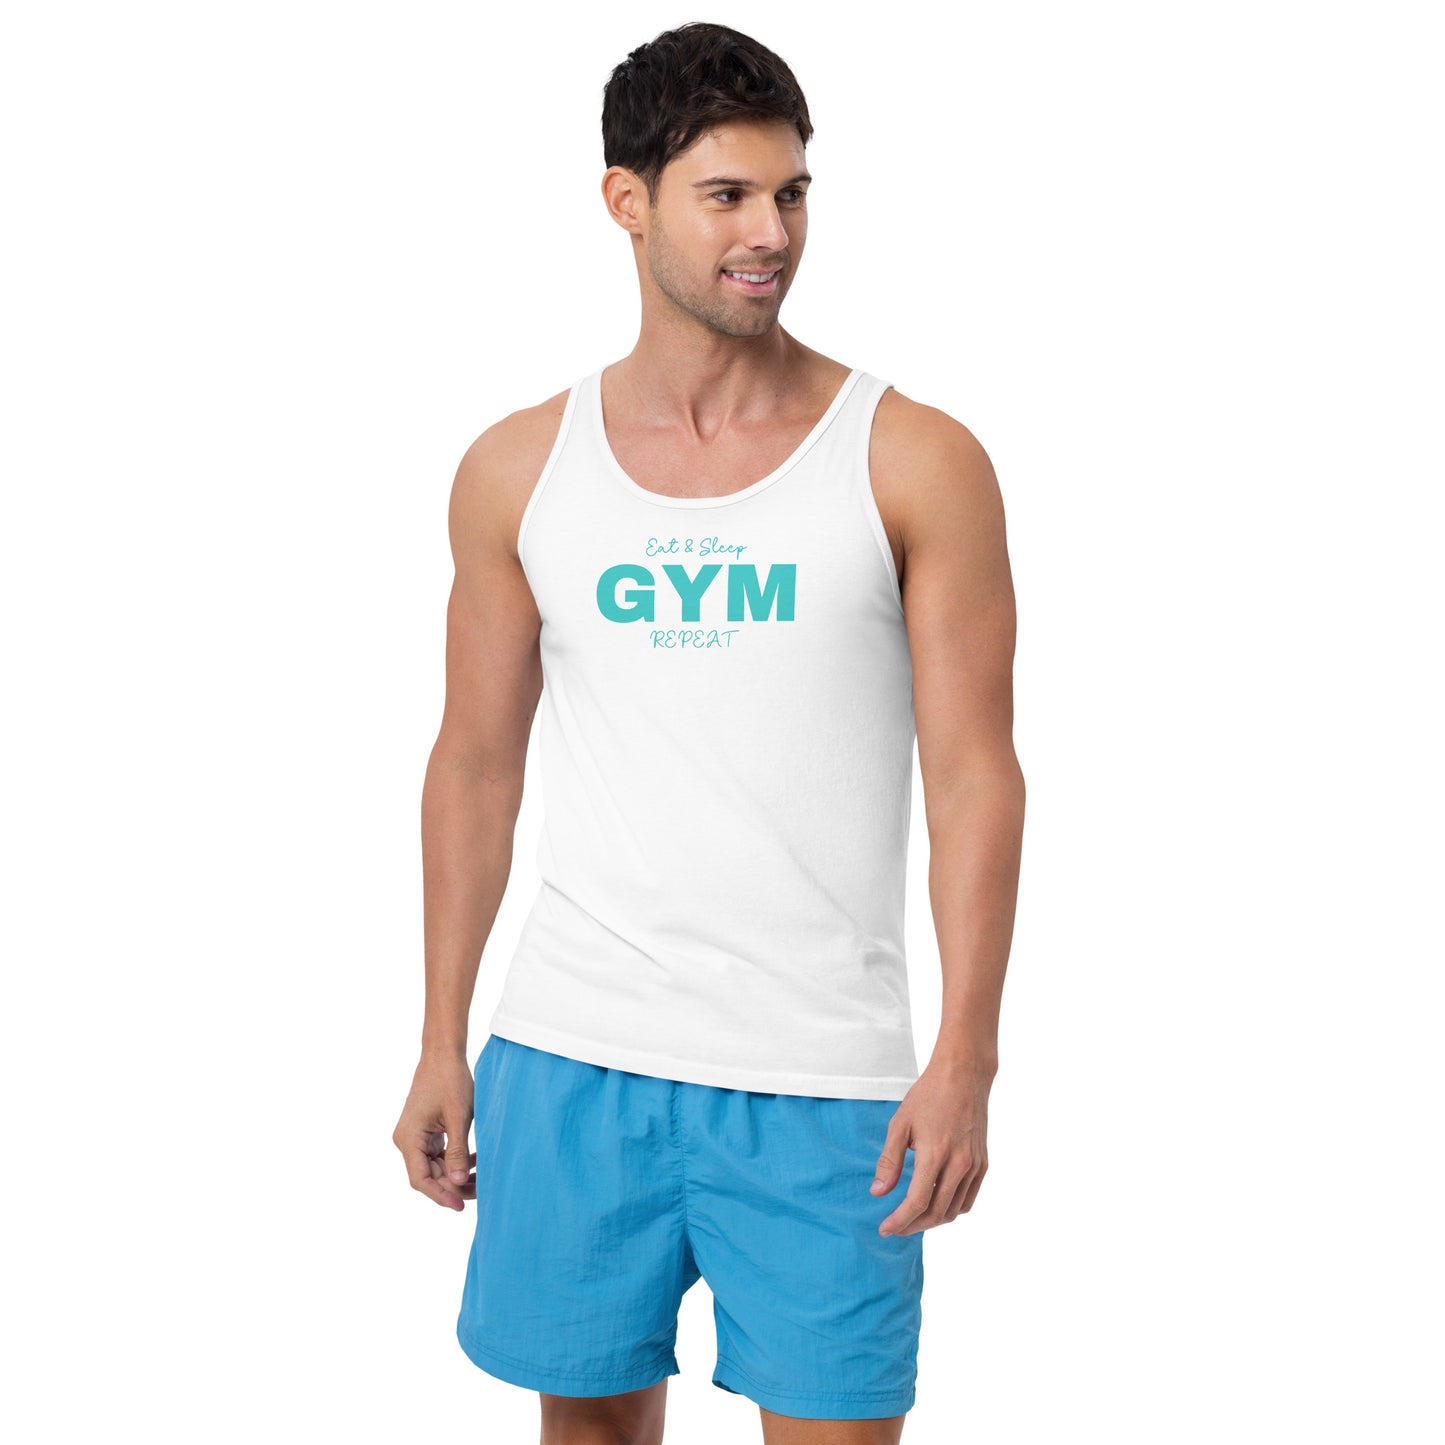 "Gym" men's sleeveless shirt